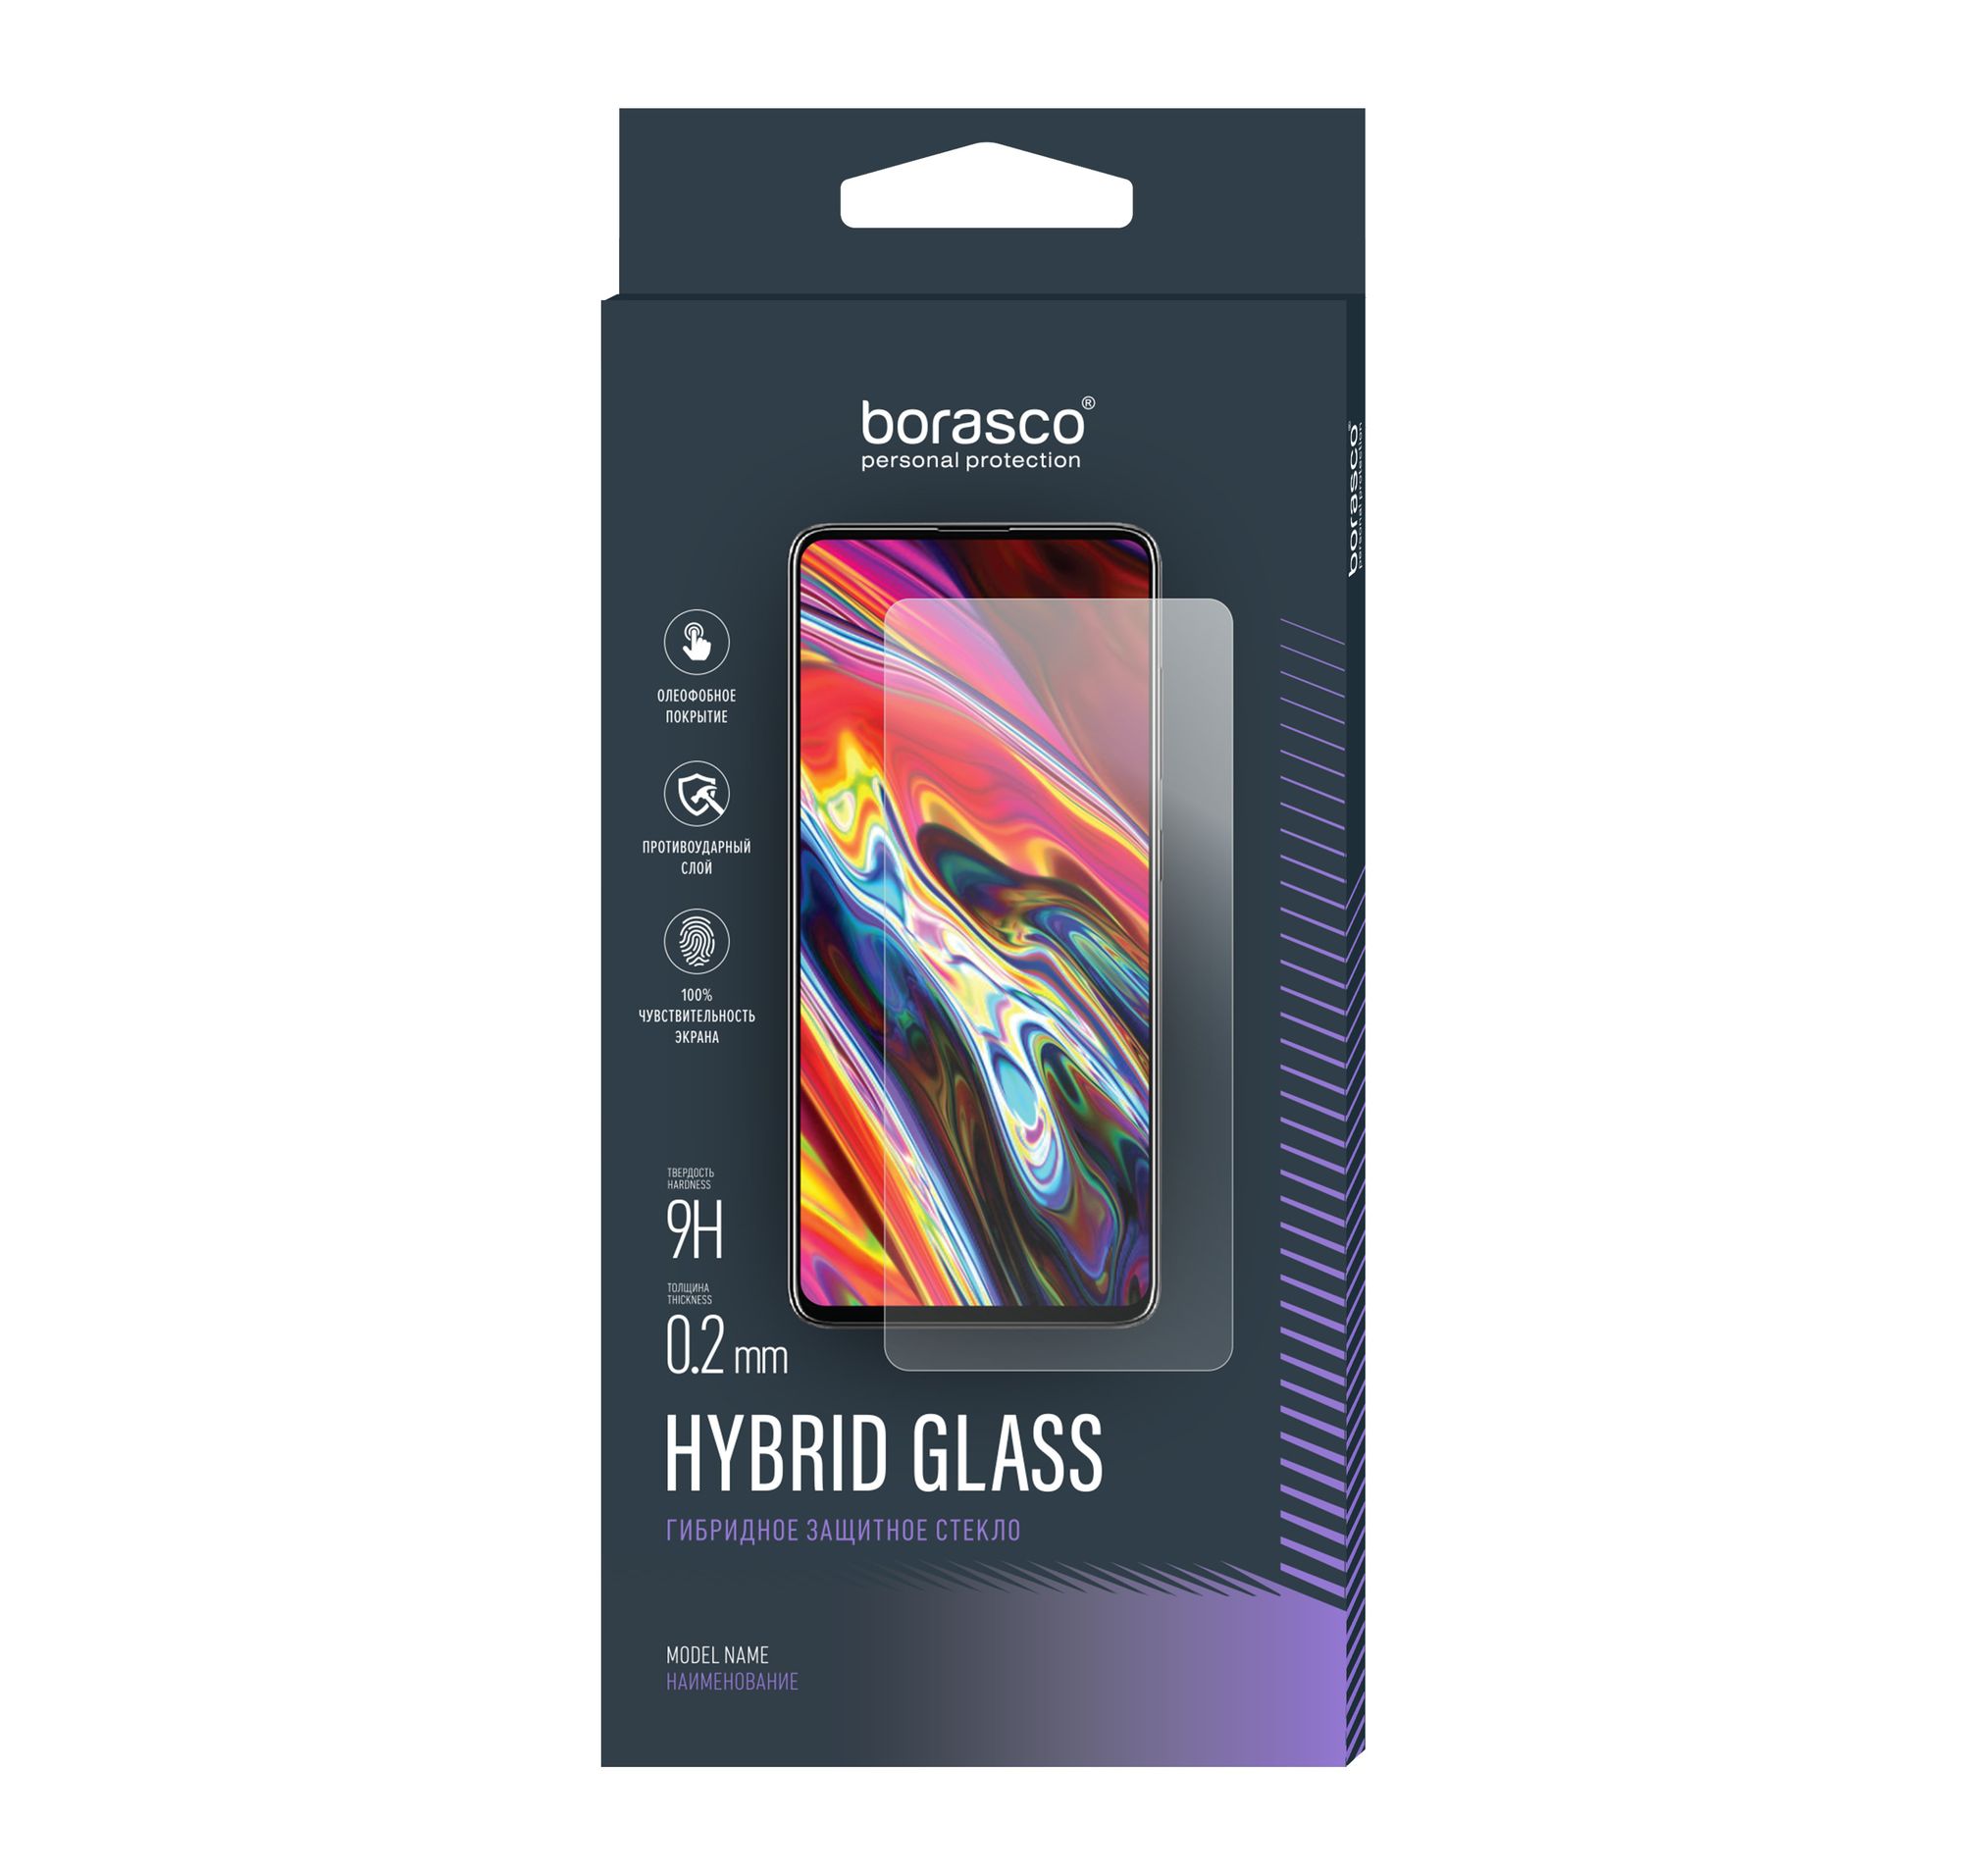 Стекло защитное Hybrid Glass VSP 0,26 мм для OPPO RENO стекло защитное krutoff для oppo reno z 22168